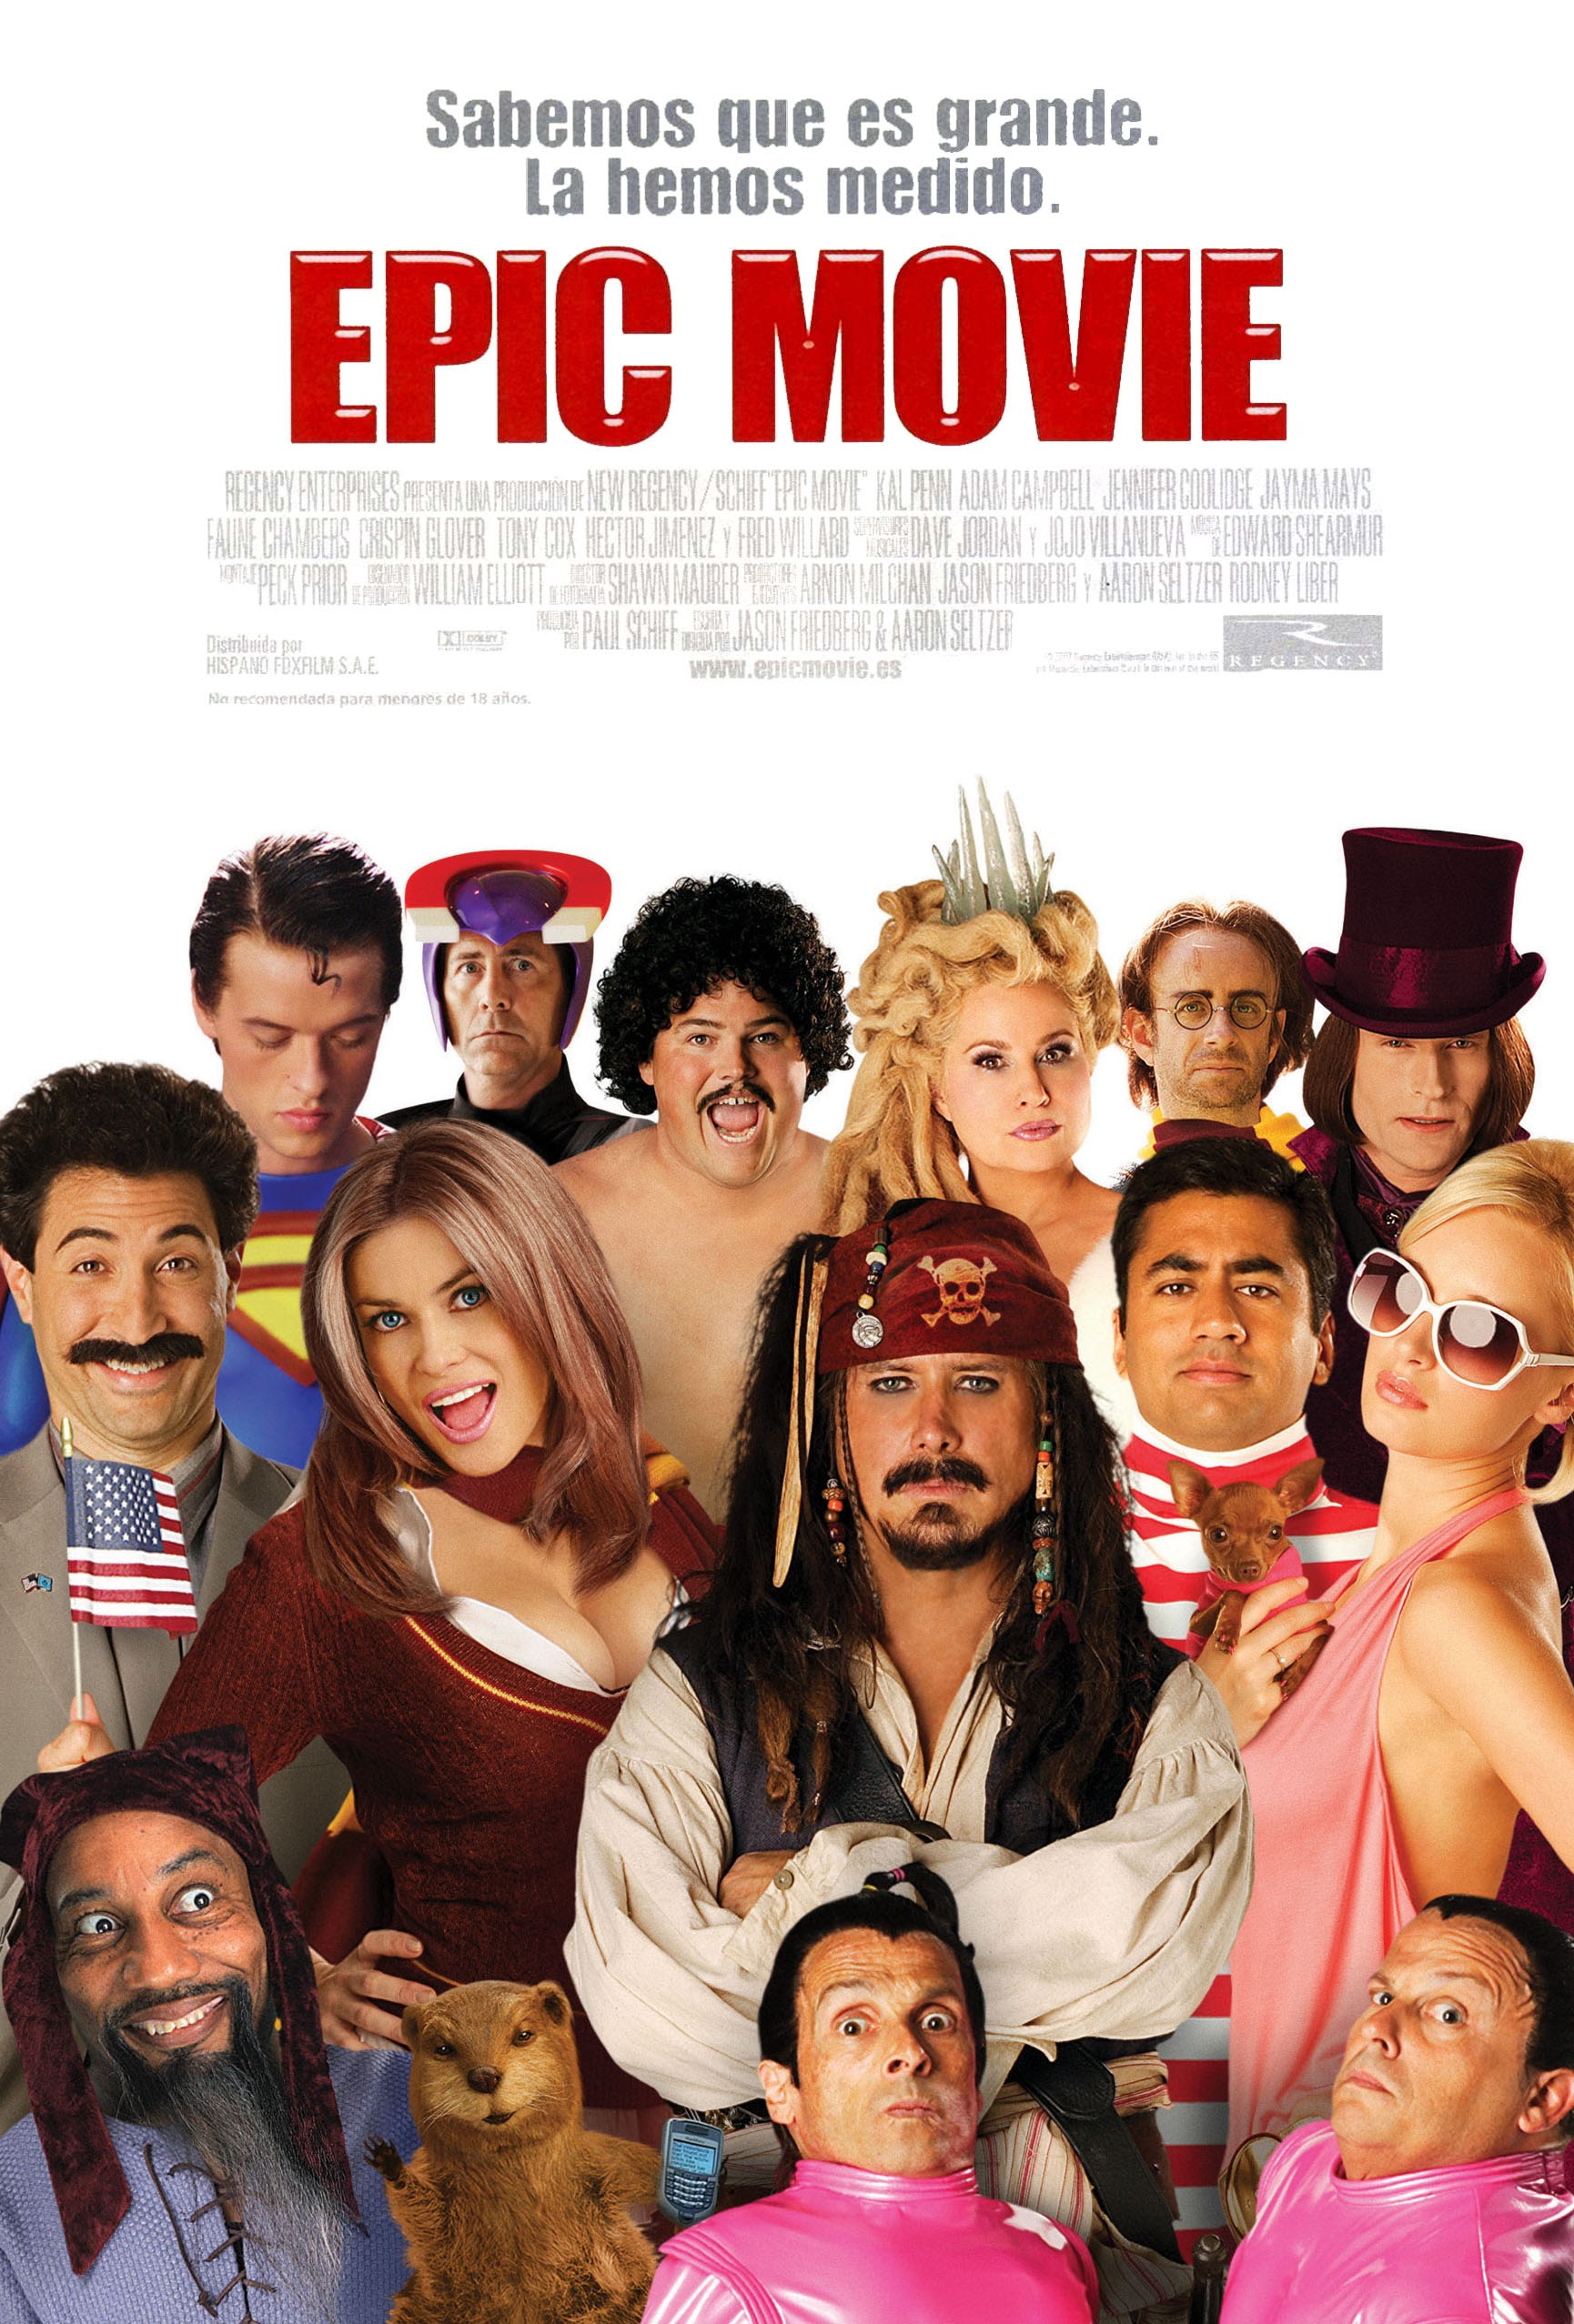 epic-movie-epic-movie-2007-c-rtelesmix